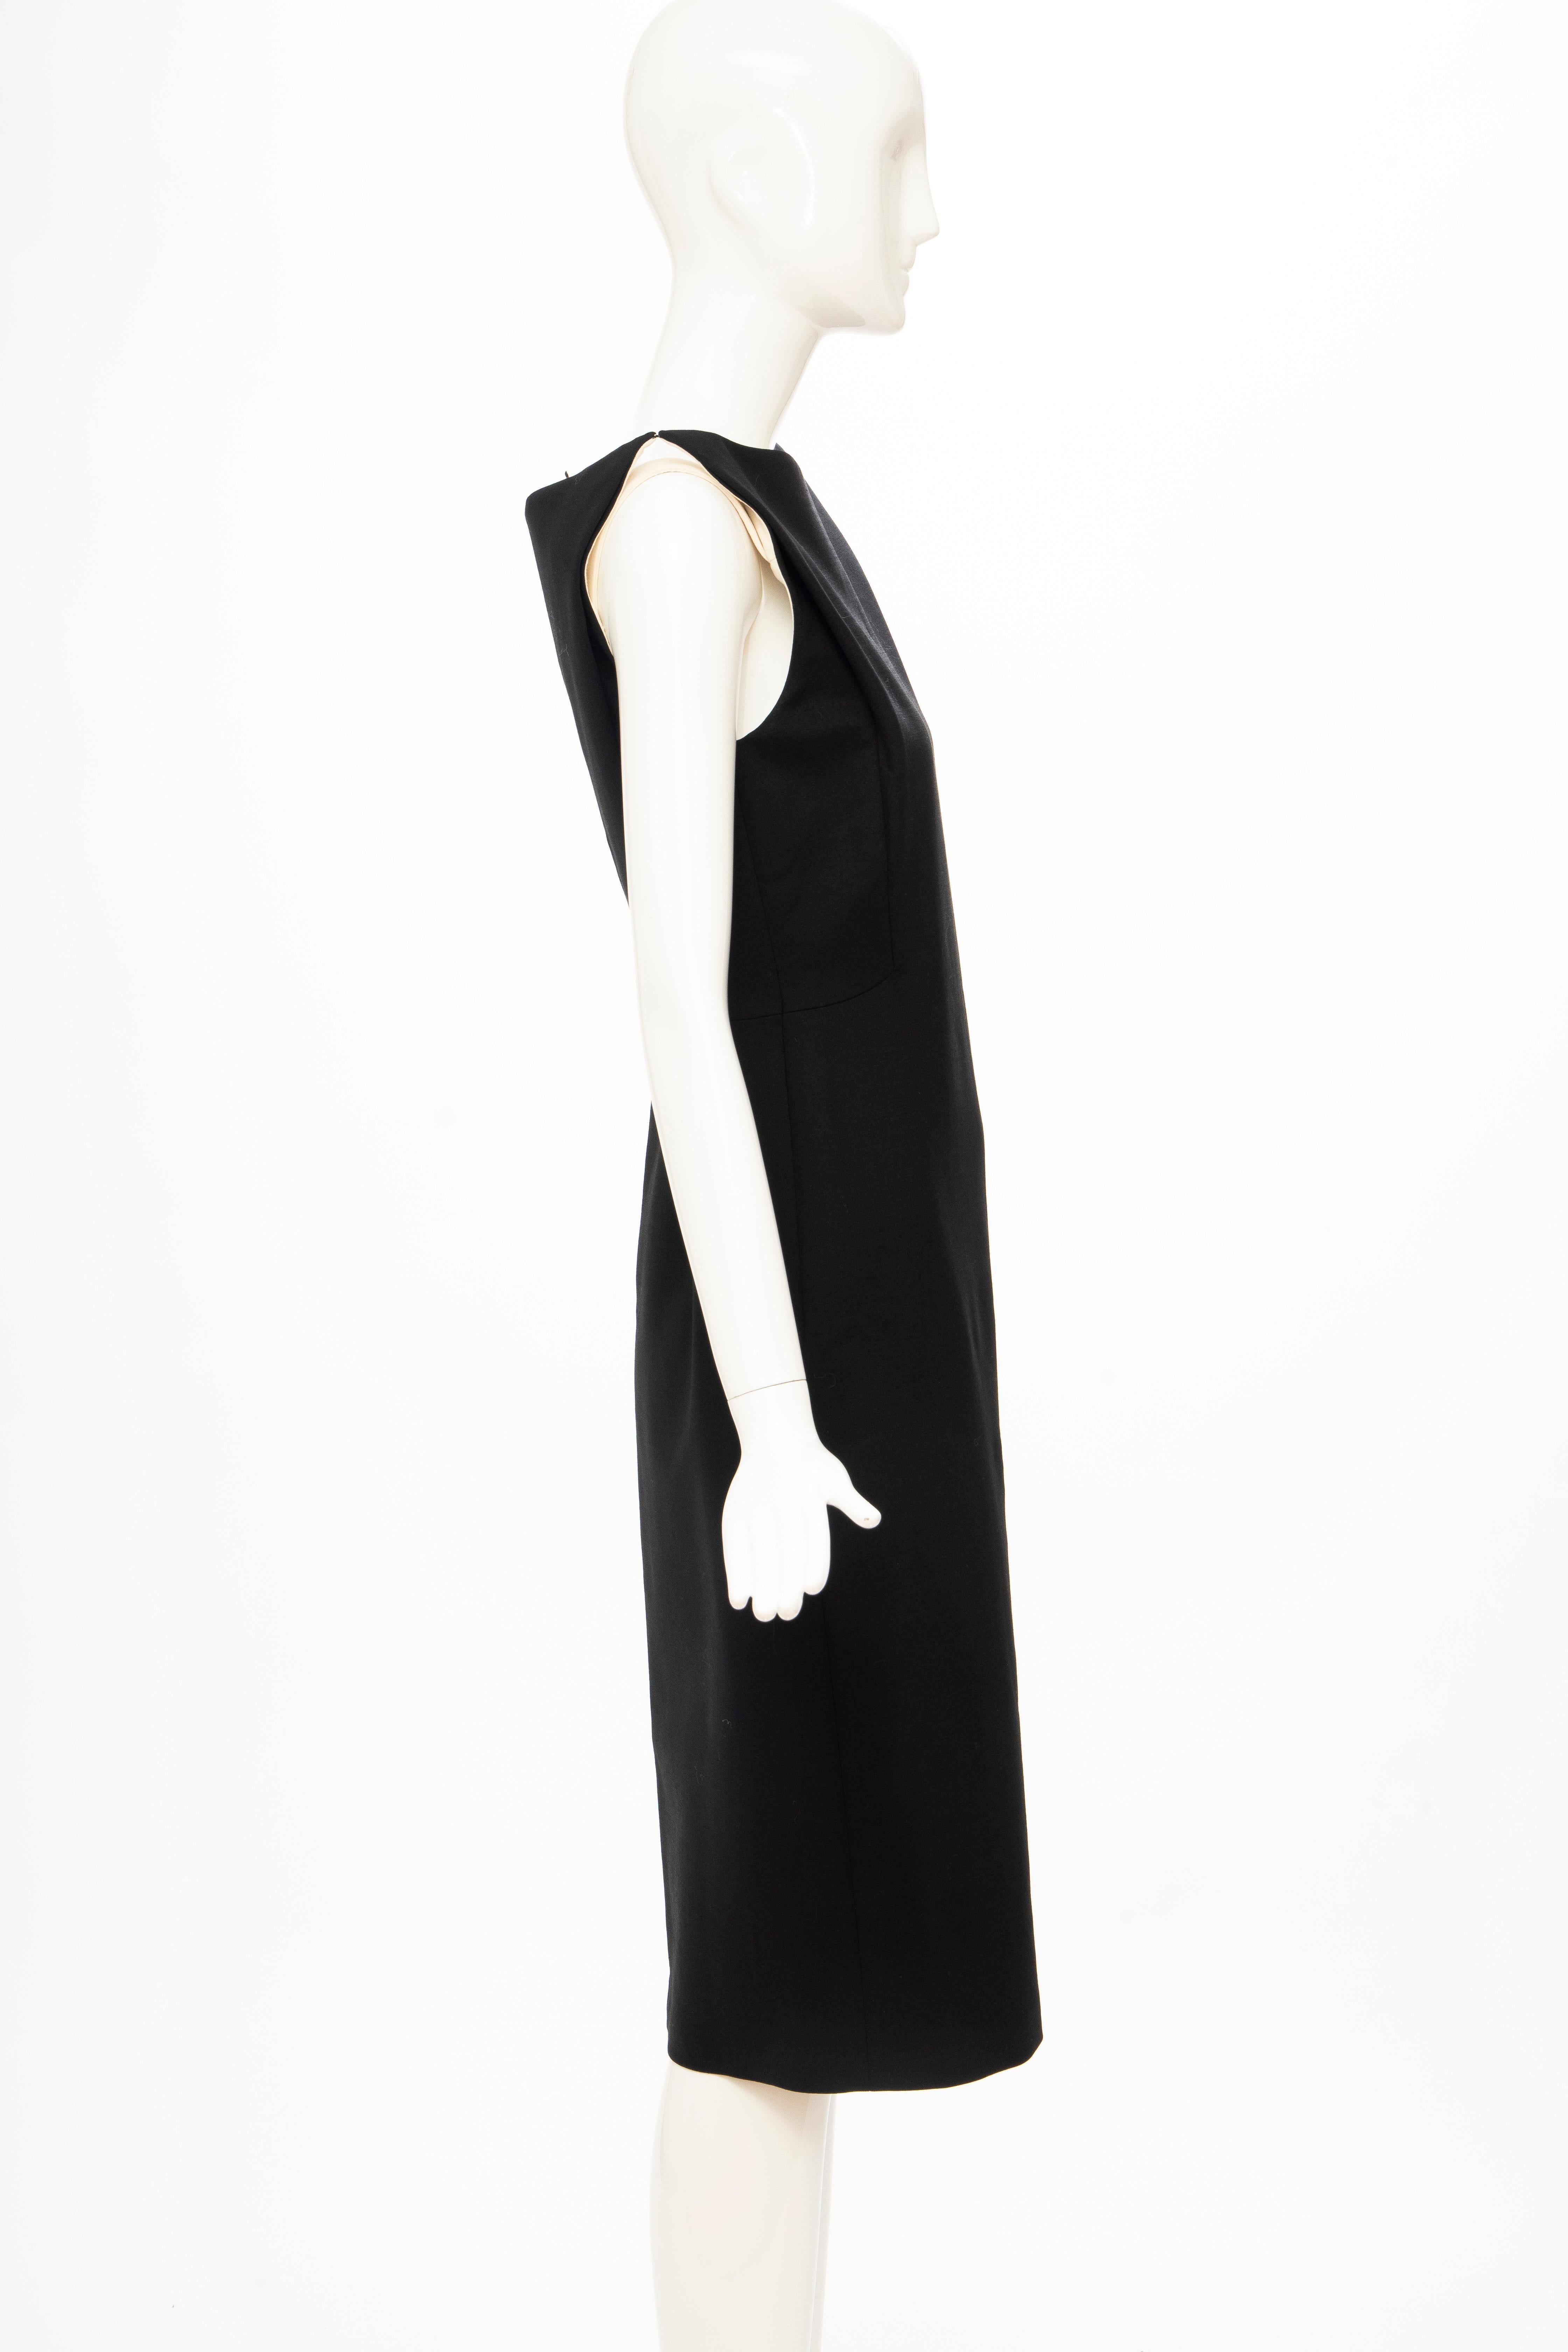 Raf Simons for Jil Sander Runway Black Wool Sculptural Evening Dress, Fall 2009 For Sale 2